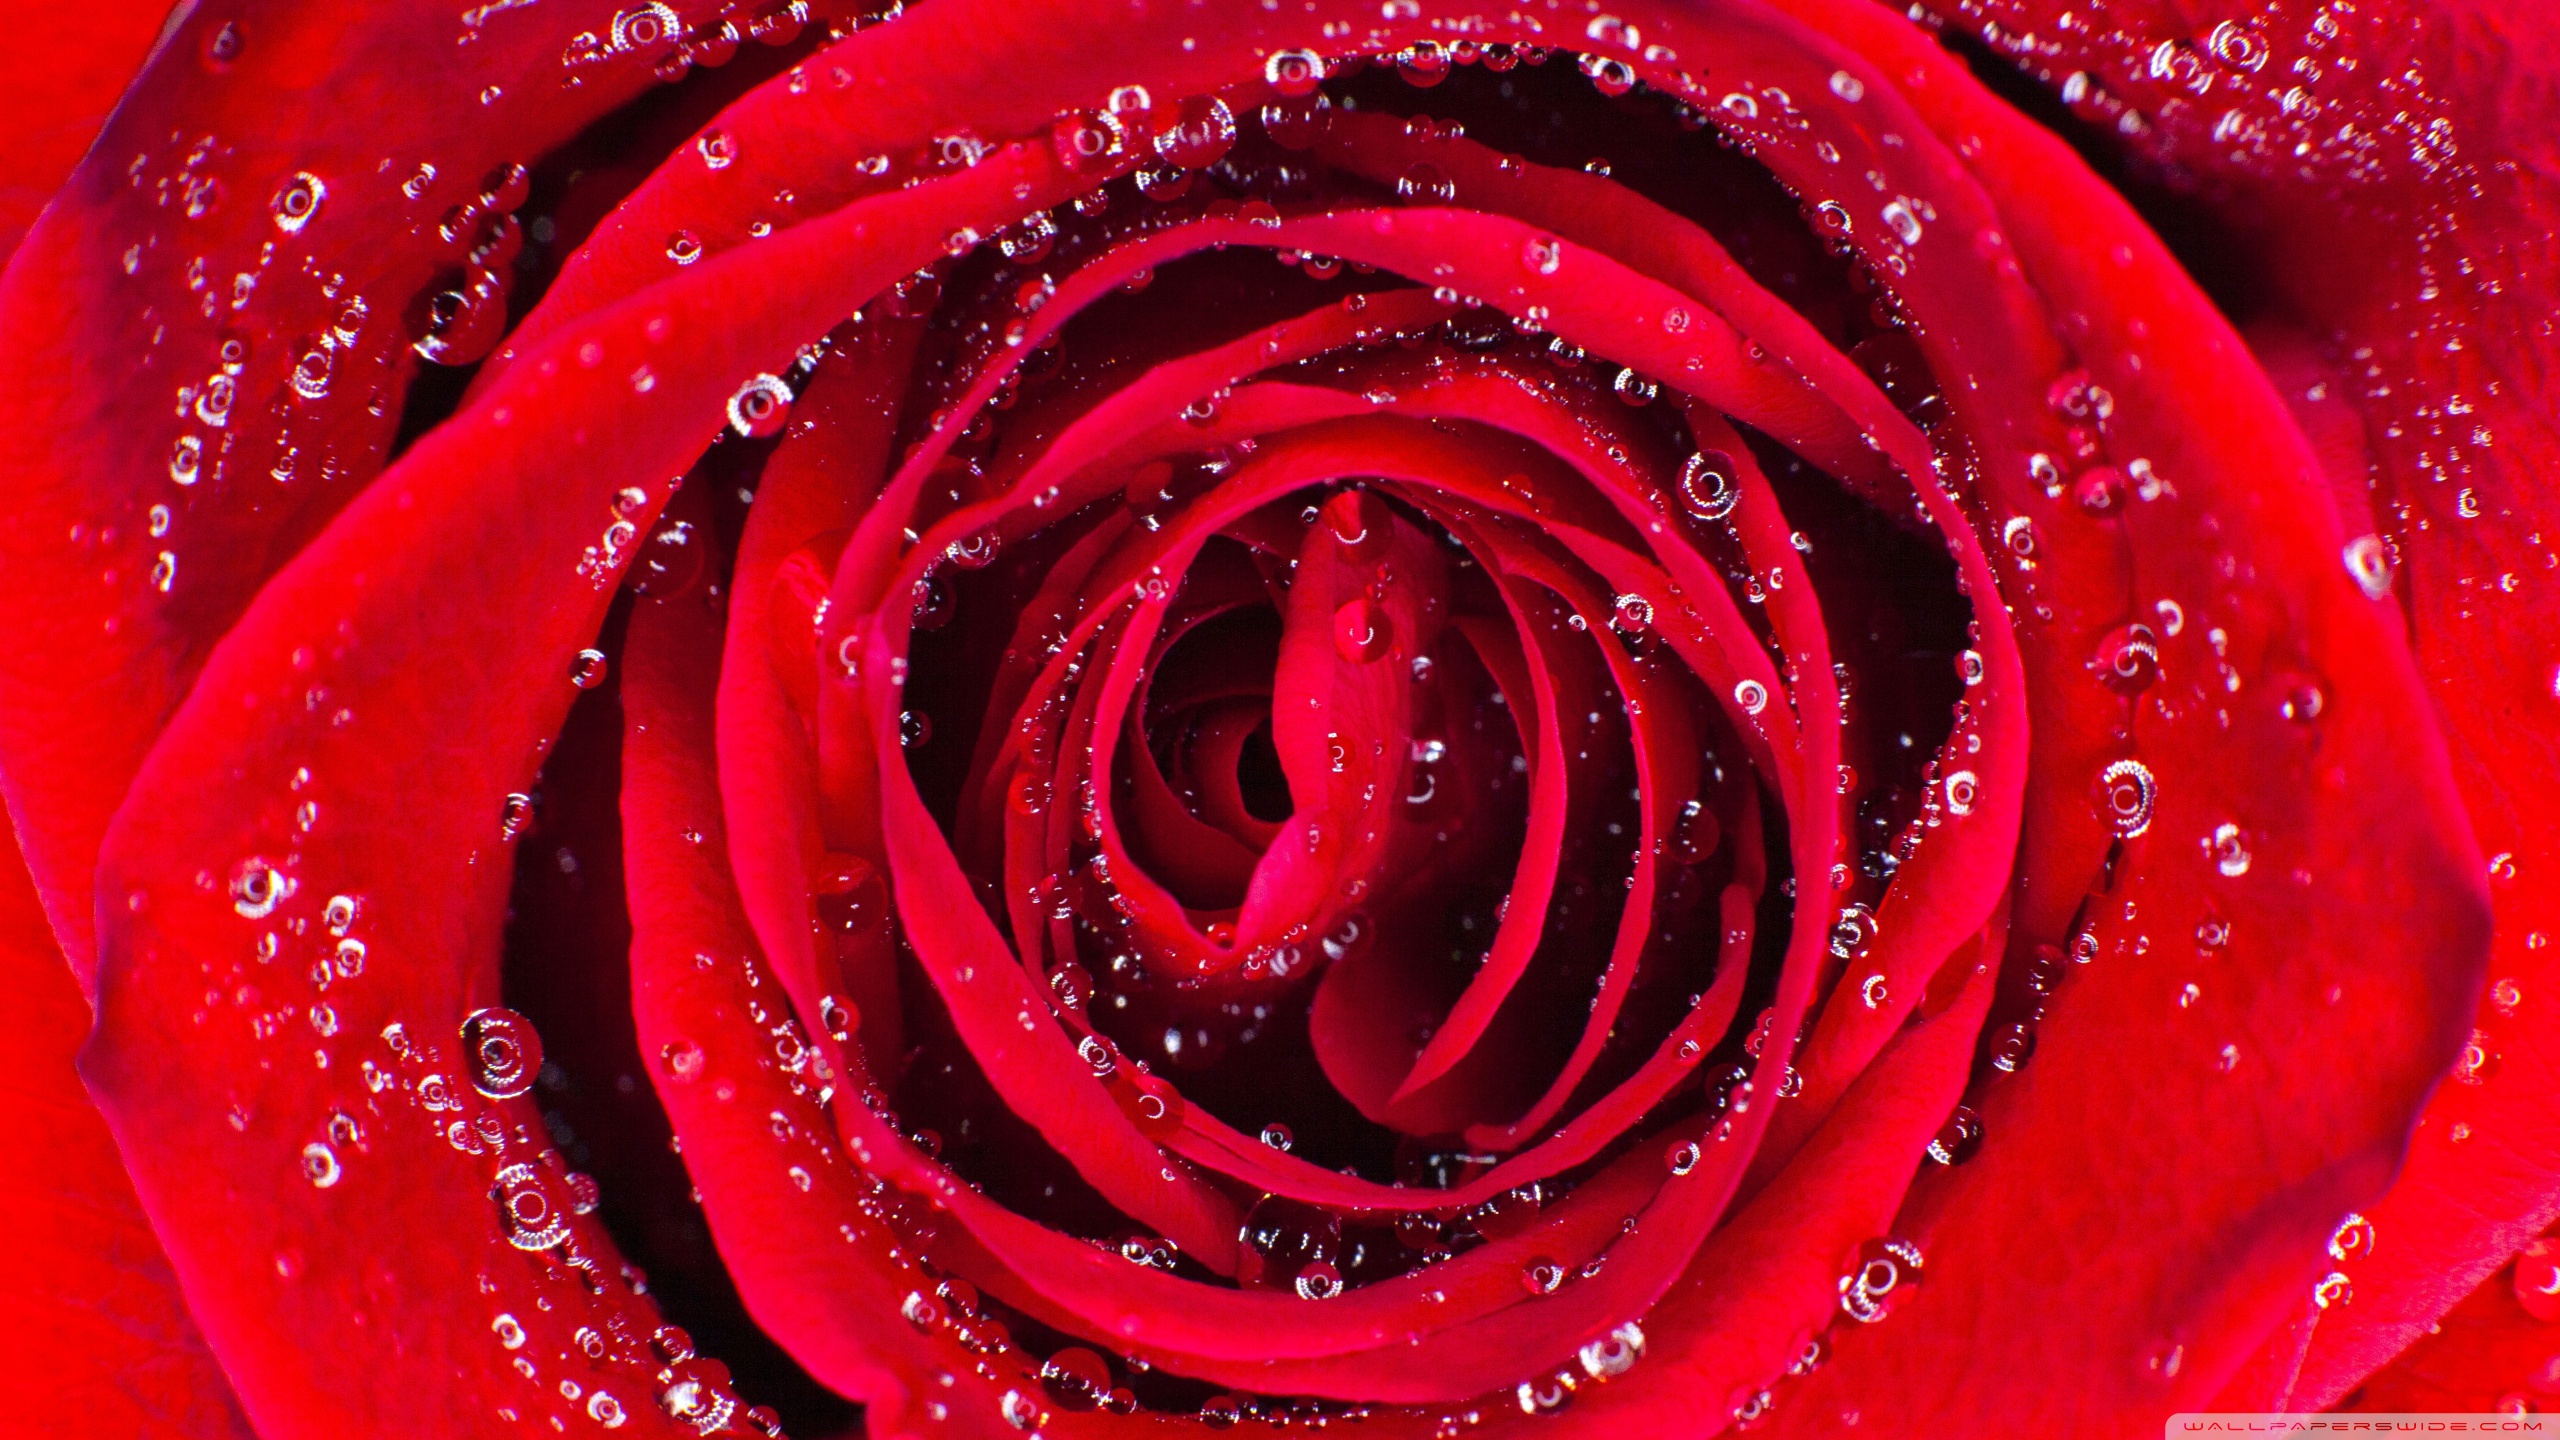 Grunge Rose Aesthetic Desktop Wallpapers - Top Những Hình Ảnh Đẹp